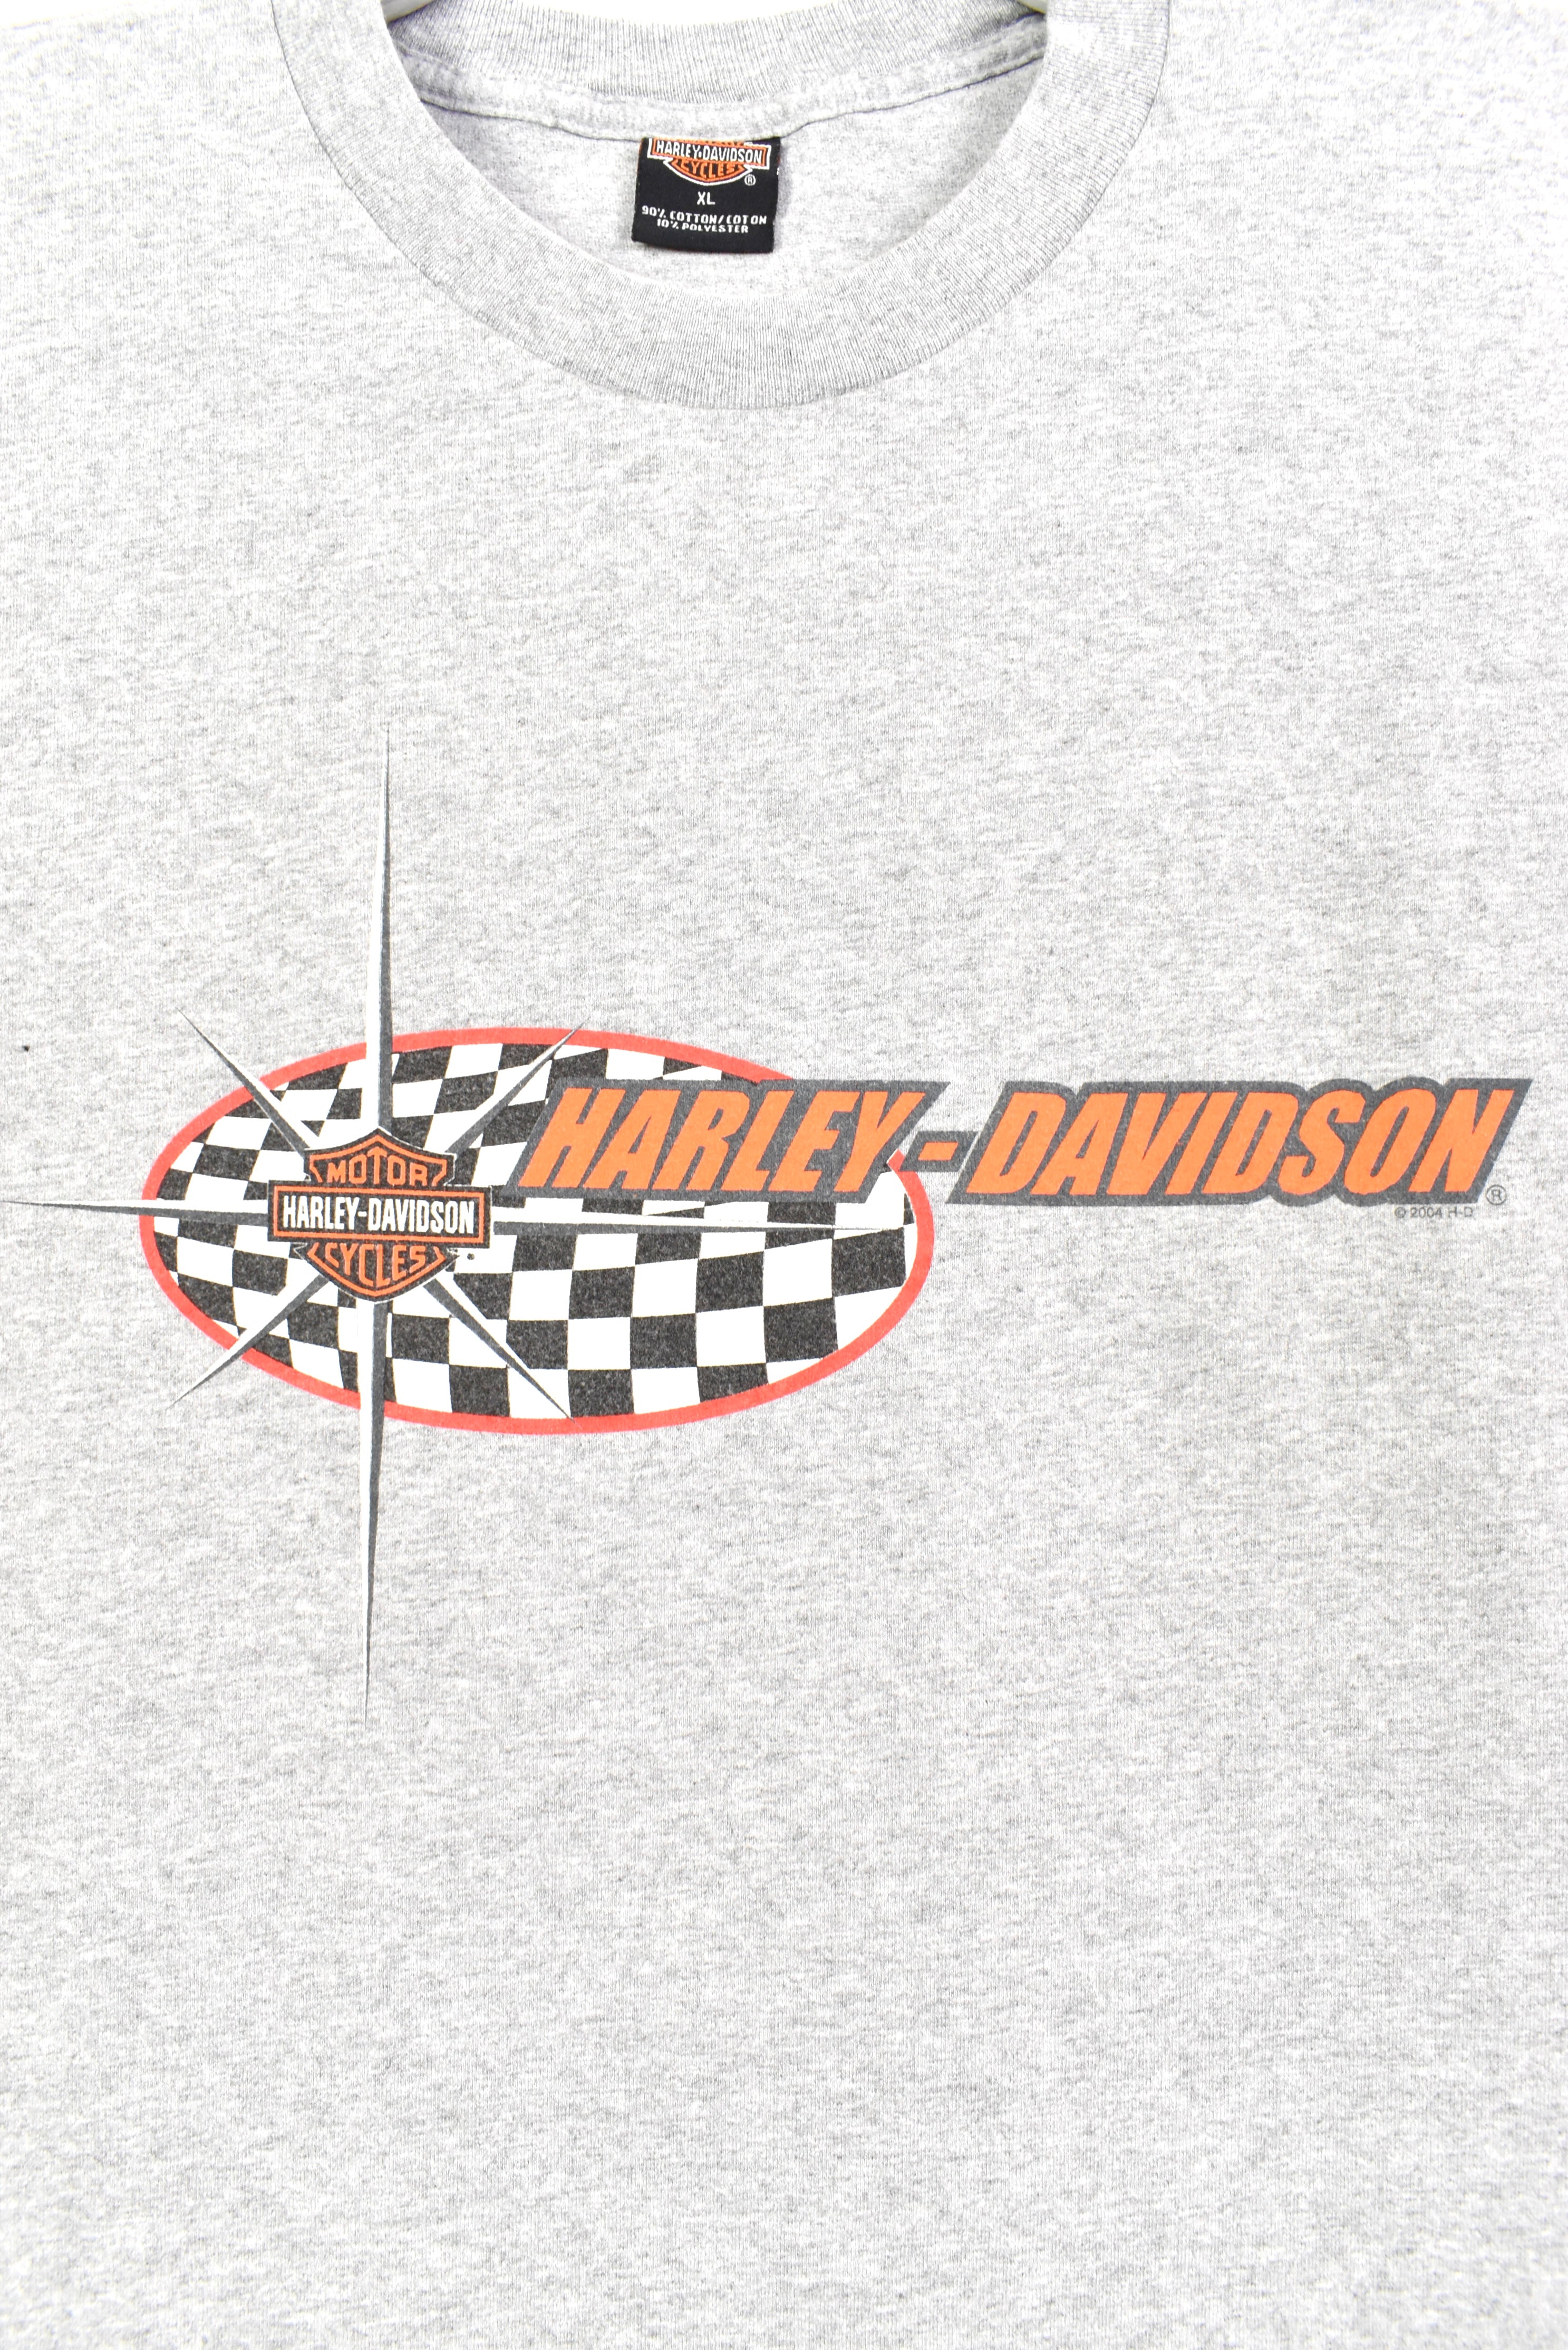 Vintage Harley Davidson grey t-shirt | XL HARLEY DAVIDSON